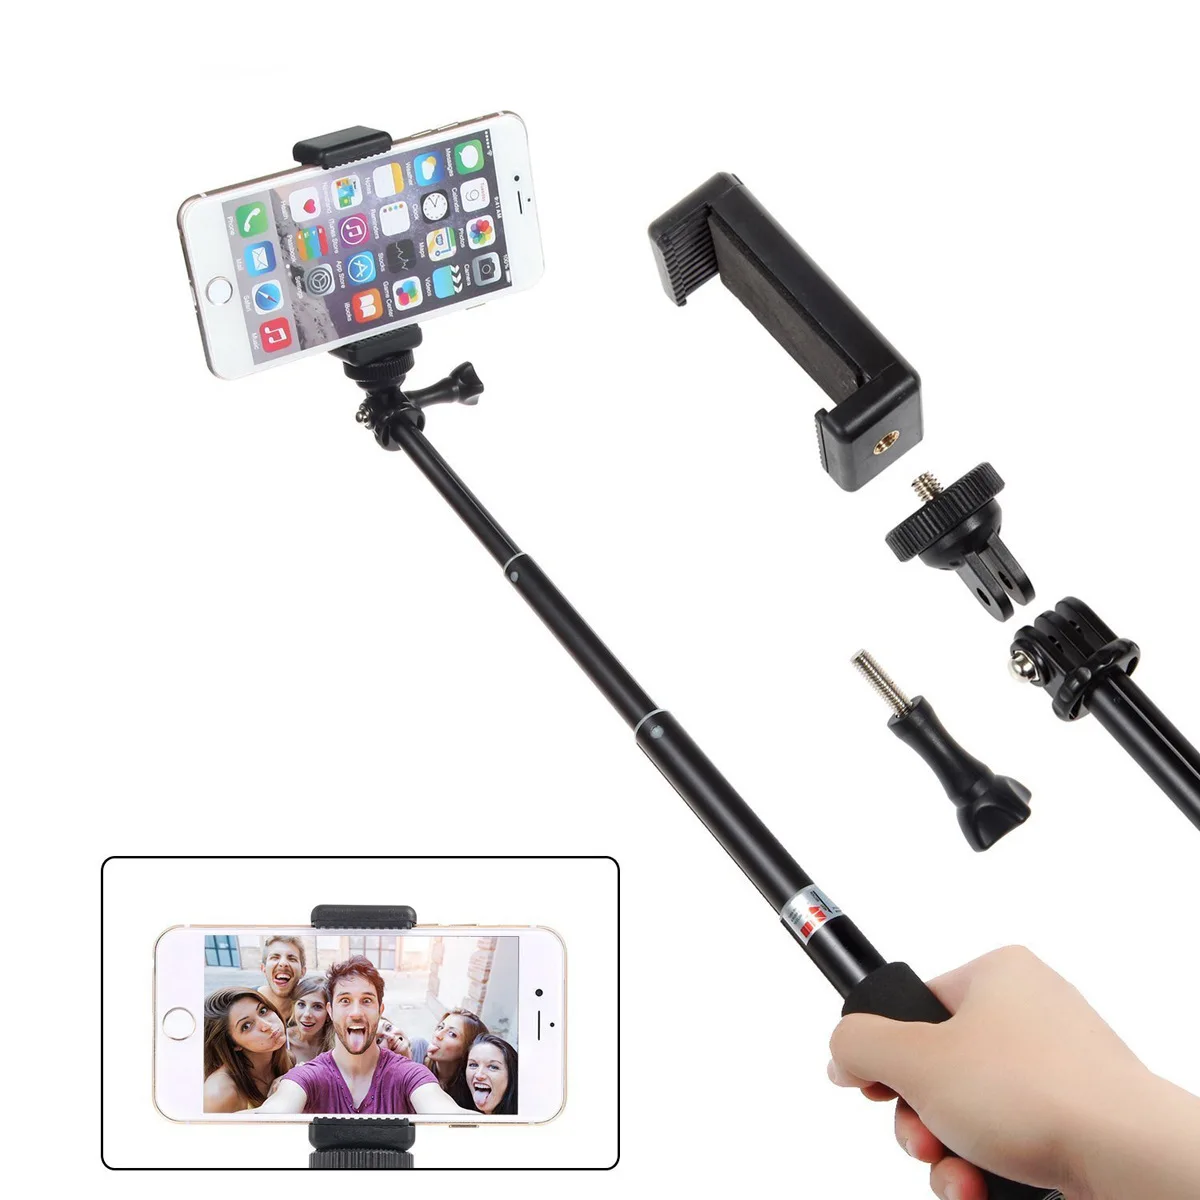 

Hot Sales Bluetooth Selfie Stick Mobile Phone Live Photo Shoot Useful Product GoPro Telescopic Bracket Multi-functional Manufact